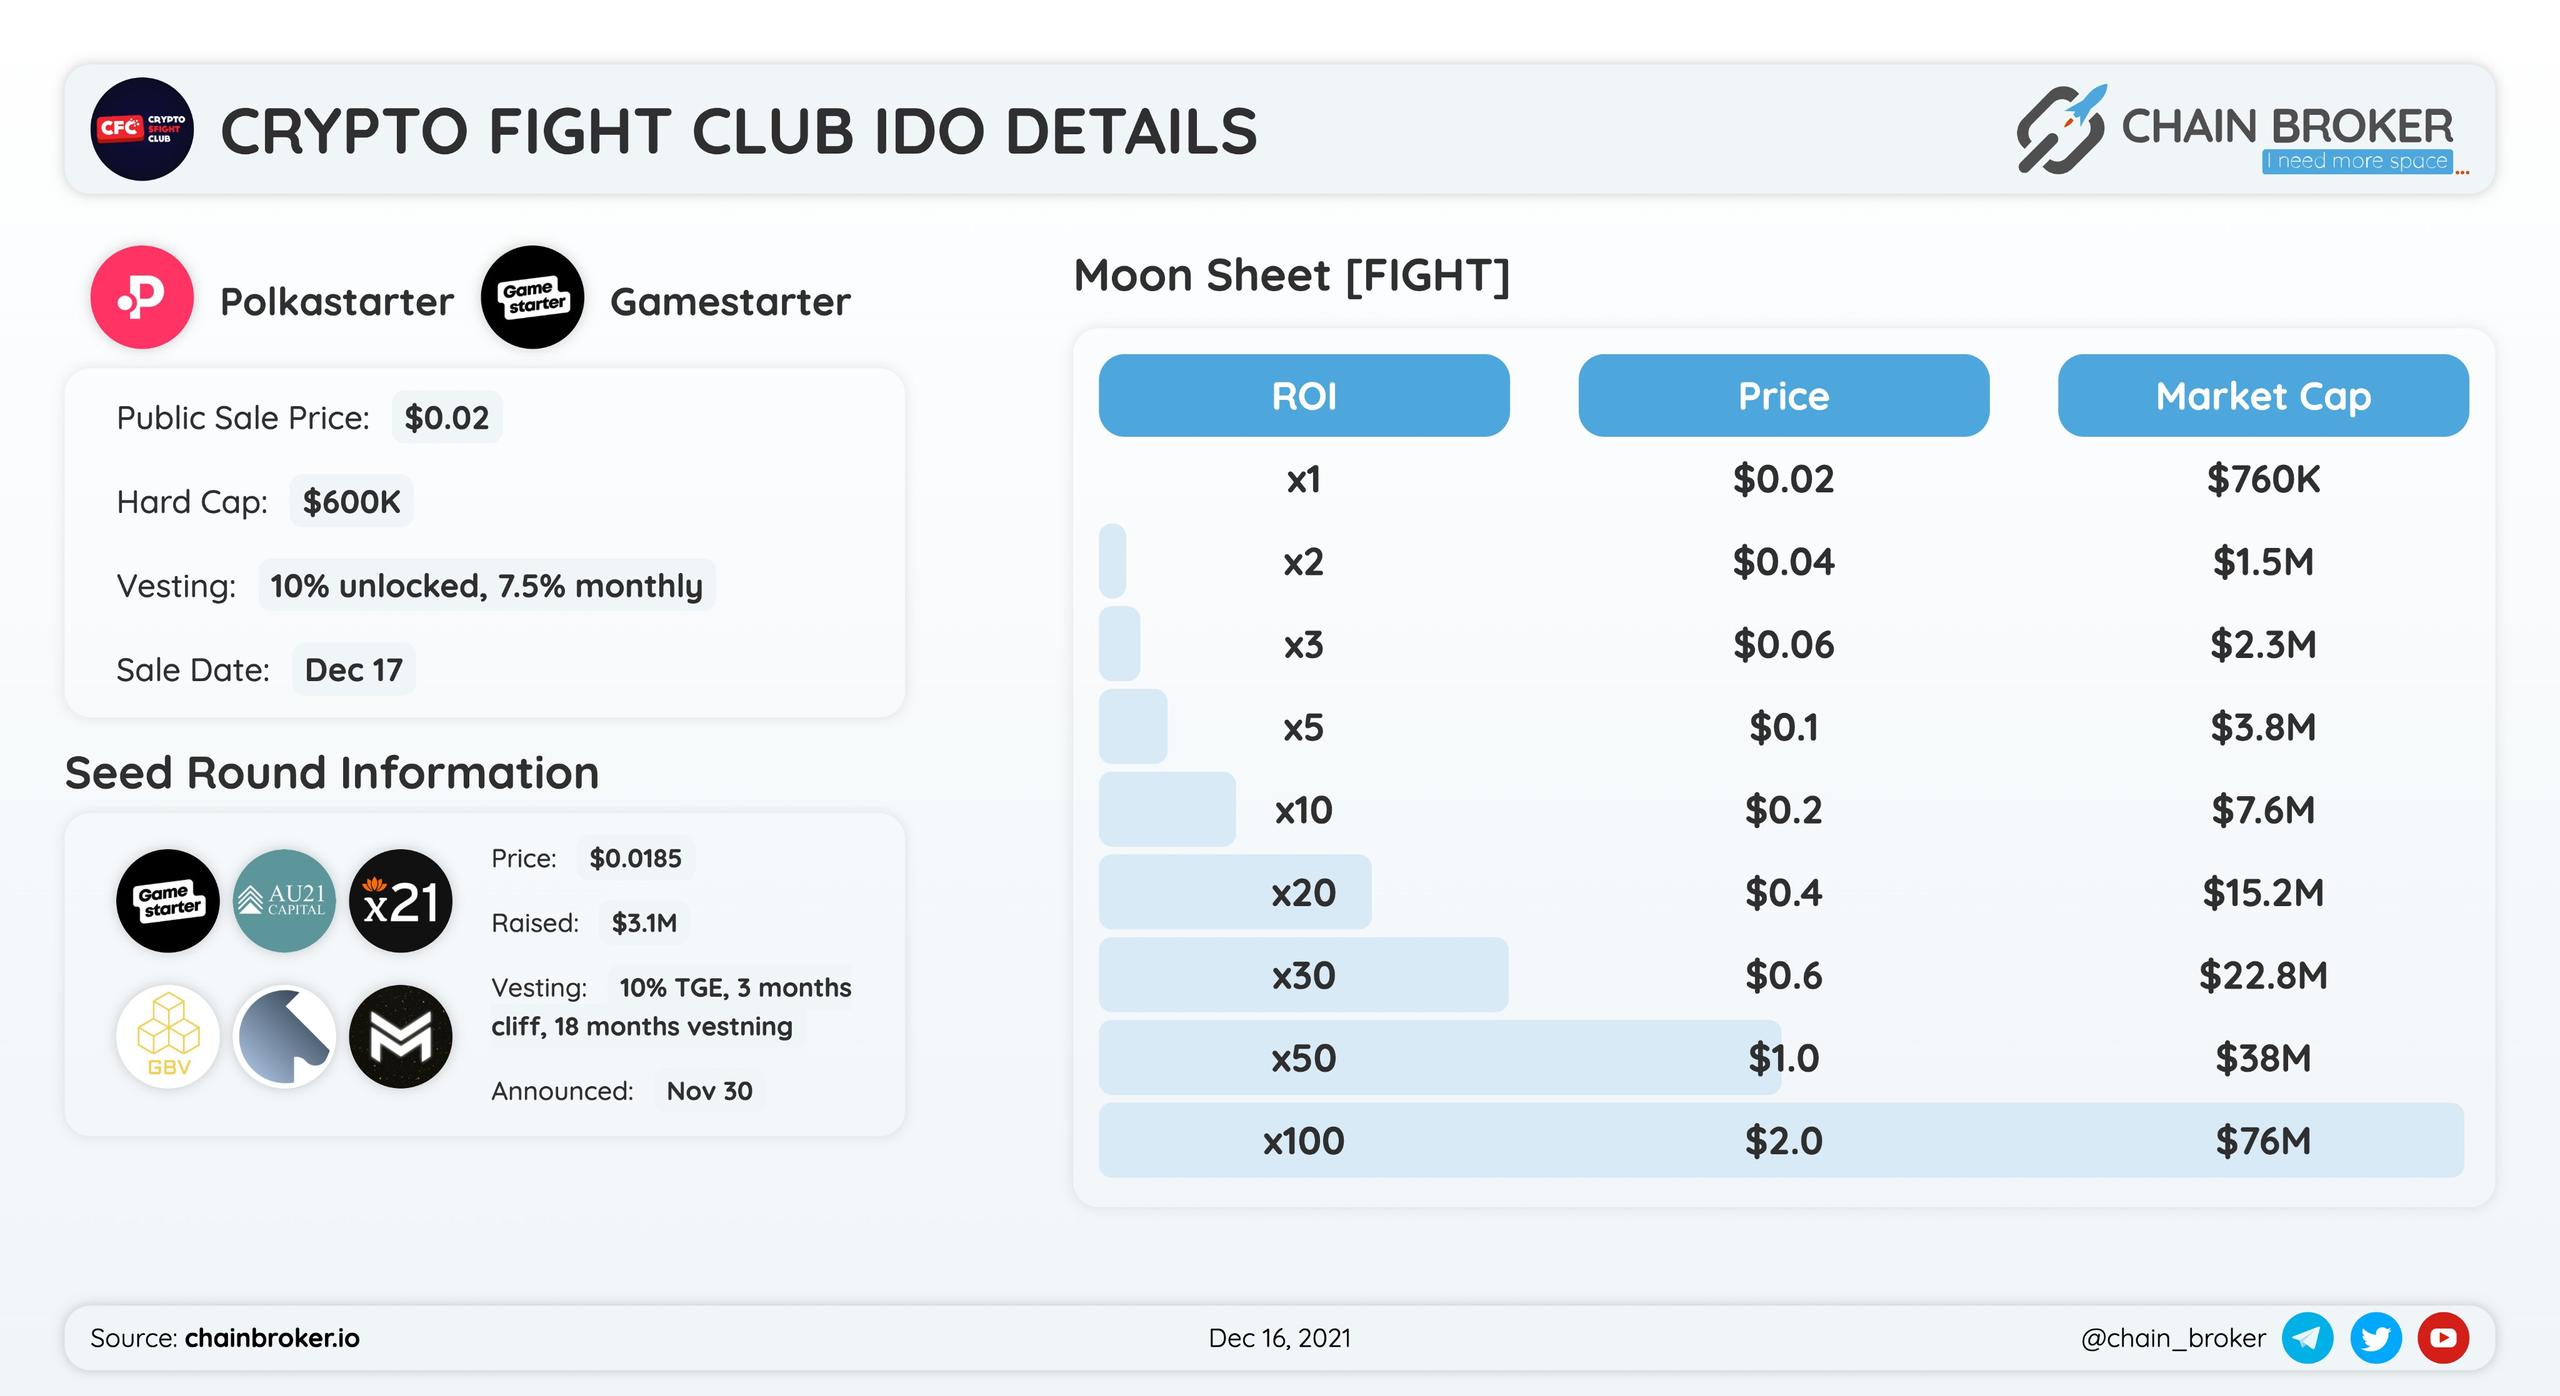 Crypto Fight Club IGO will be on Polkastarter and Gamestarter